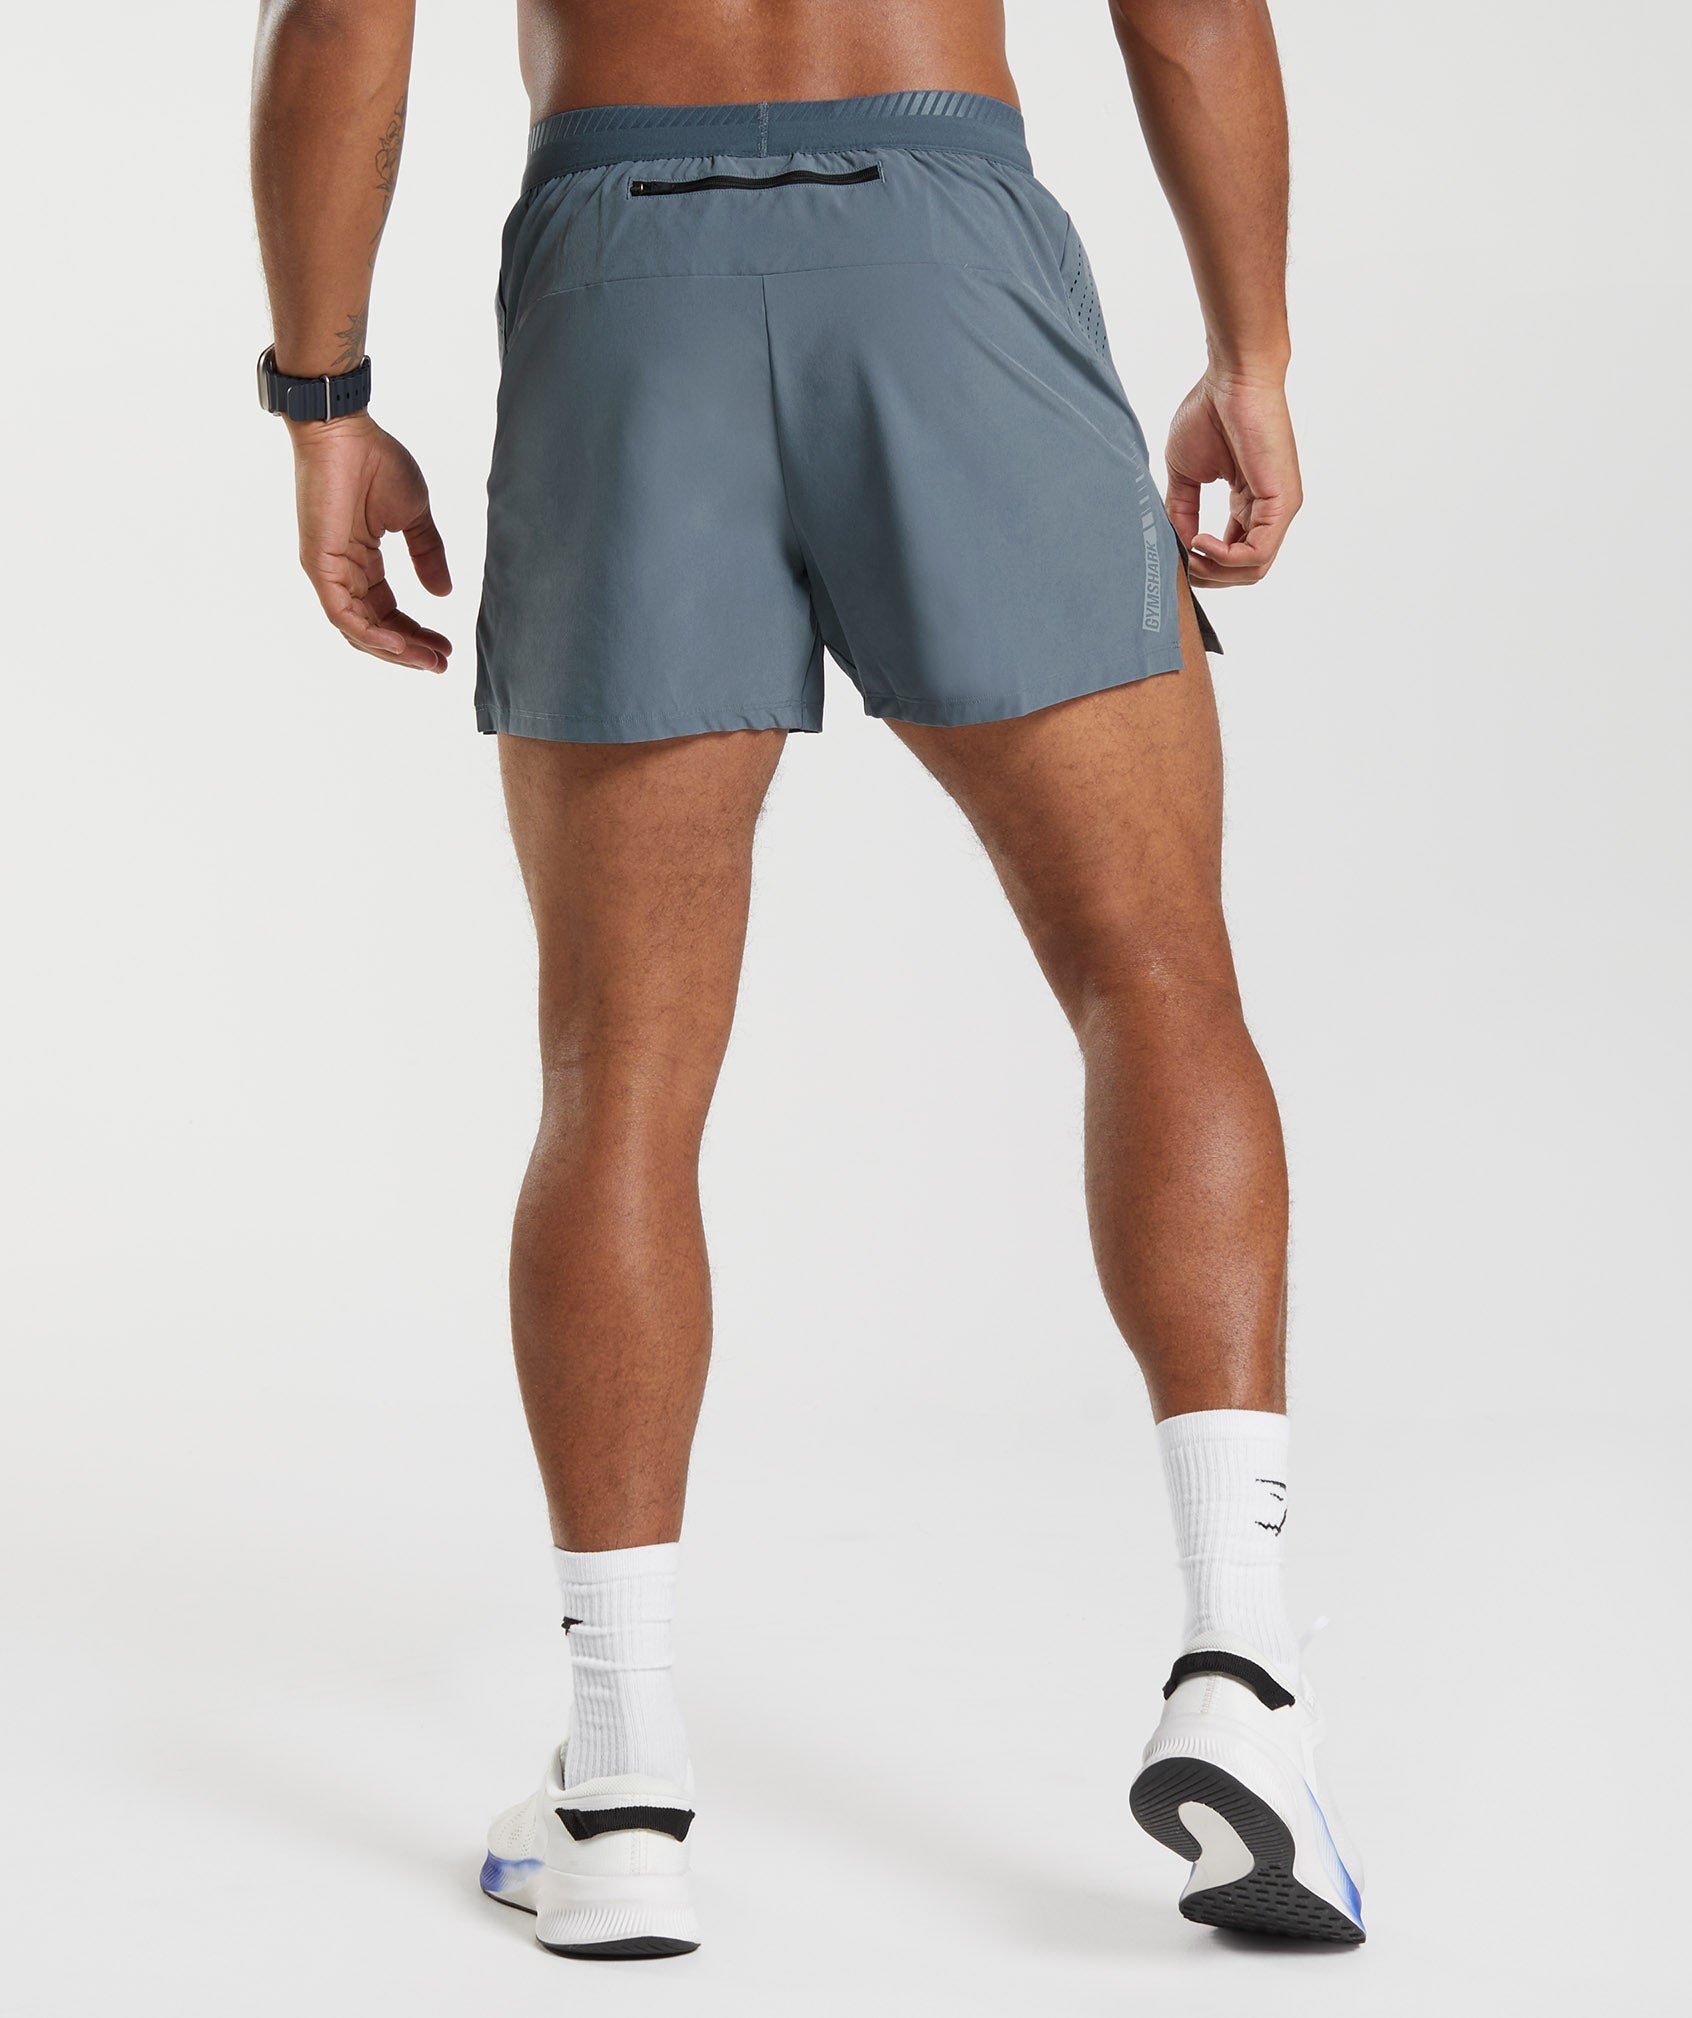 Gymshark Shorts - Element Baselayer Men Black 🔹 Size : M Fits L